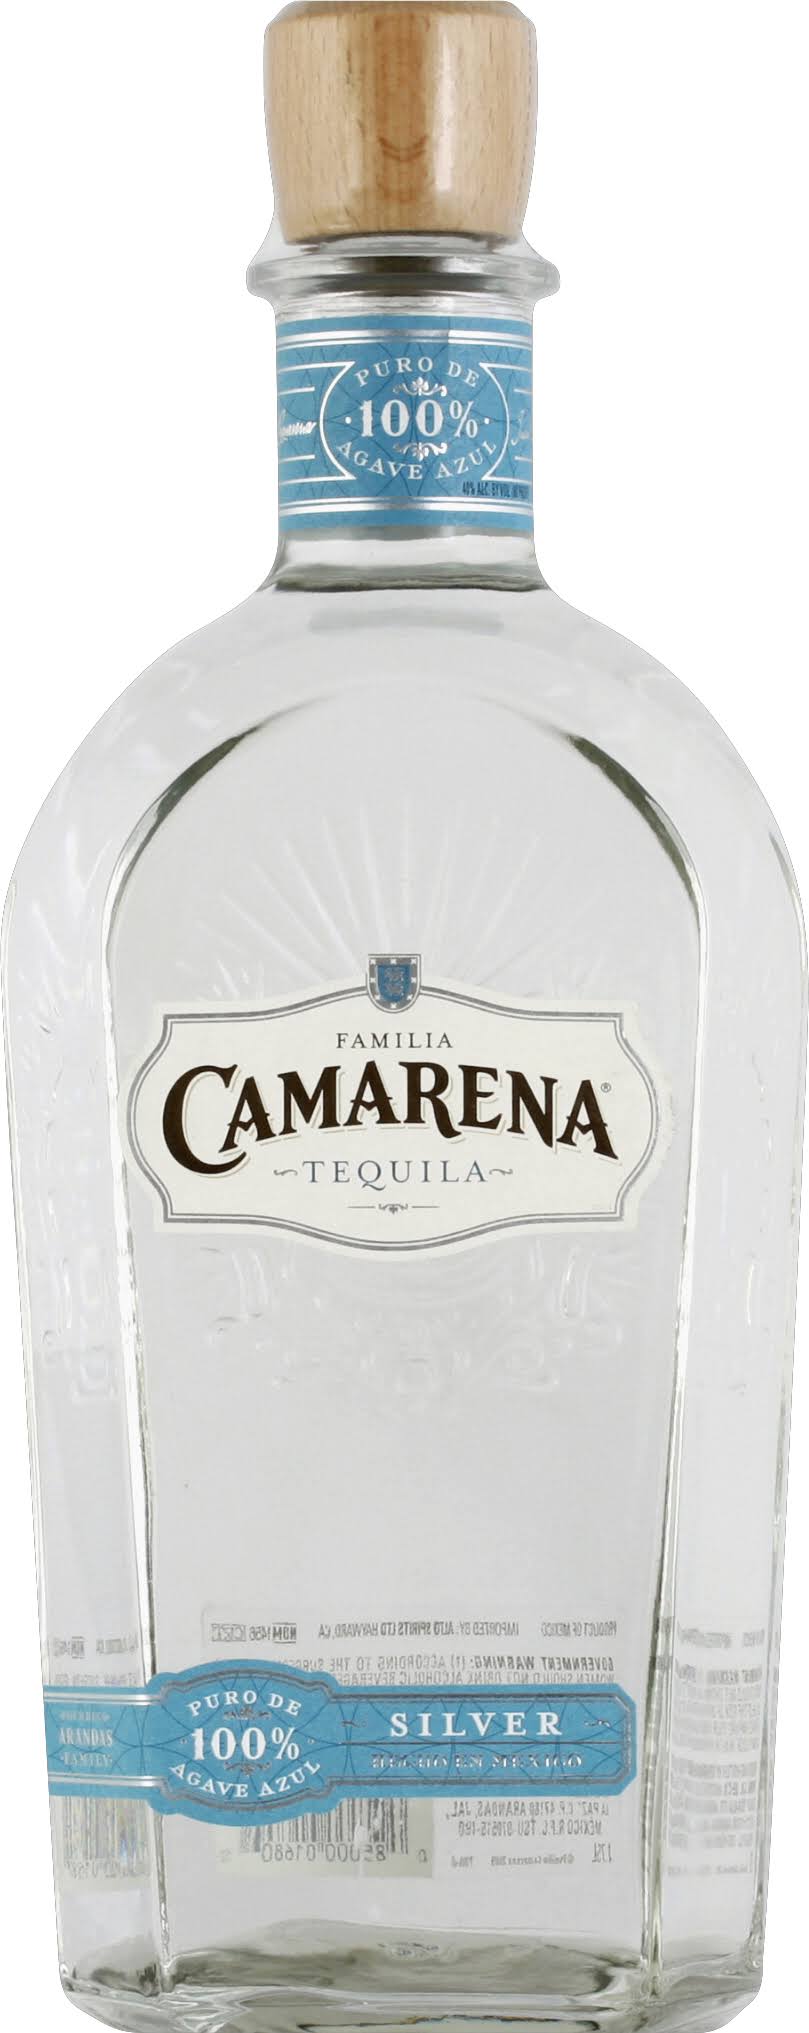 Camarena Tequila - Silver, 1.75L